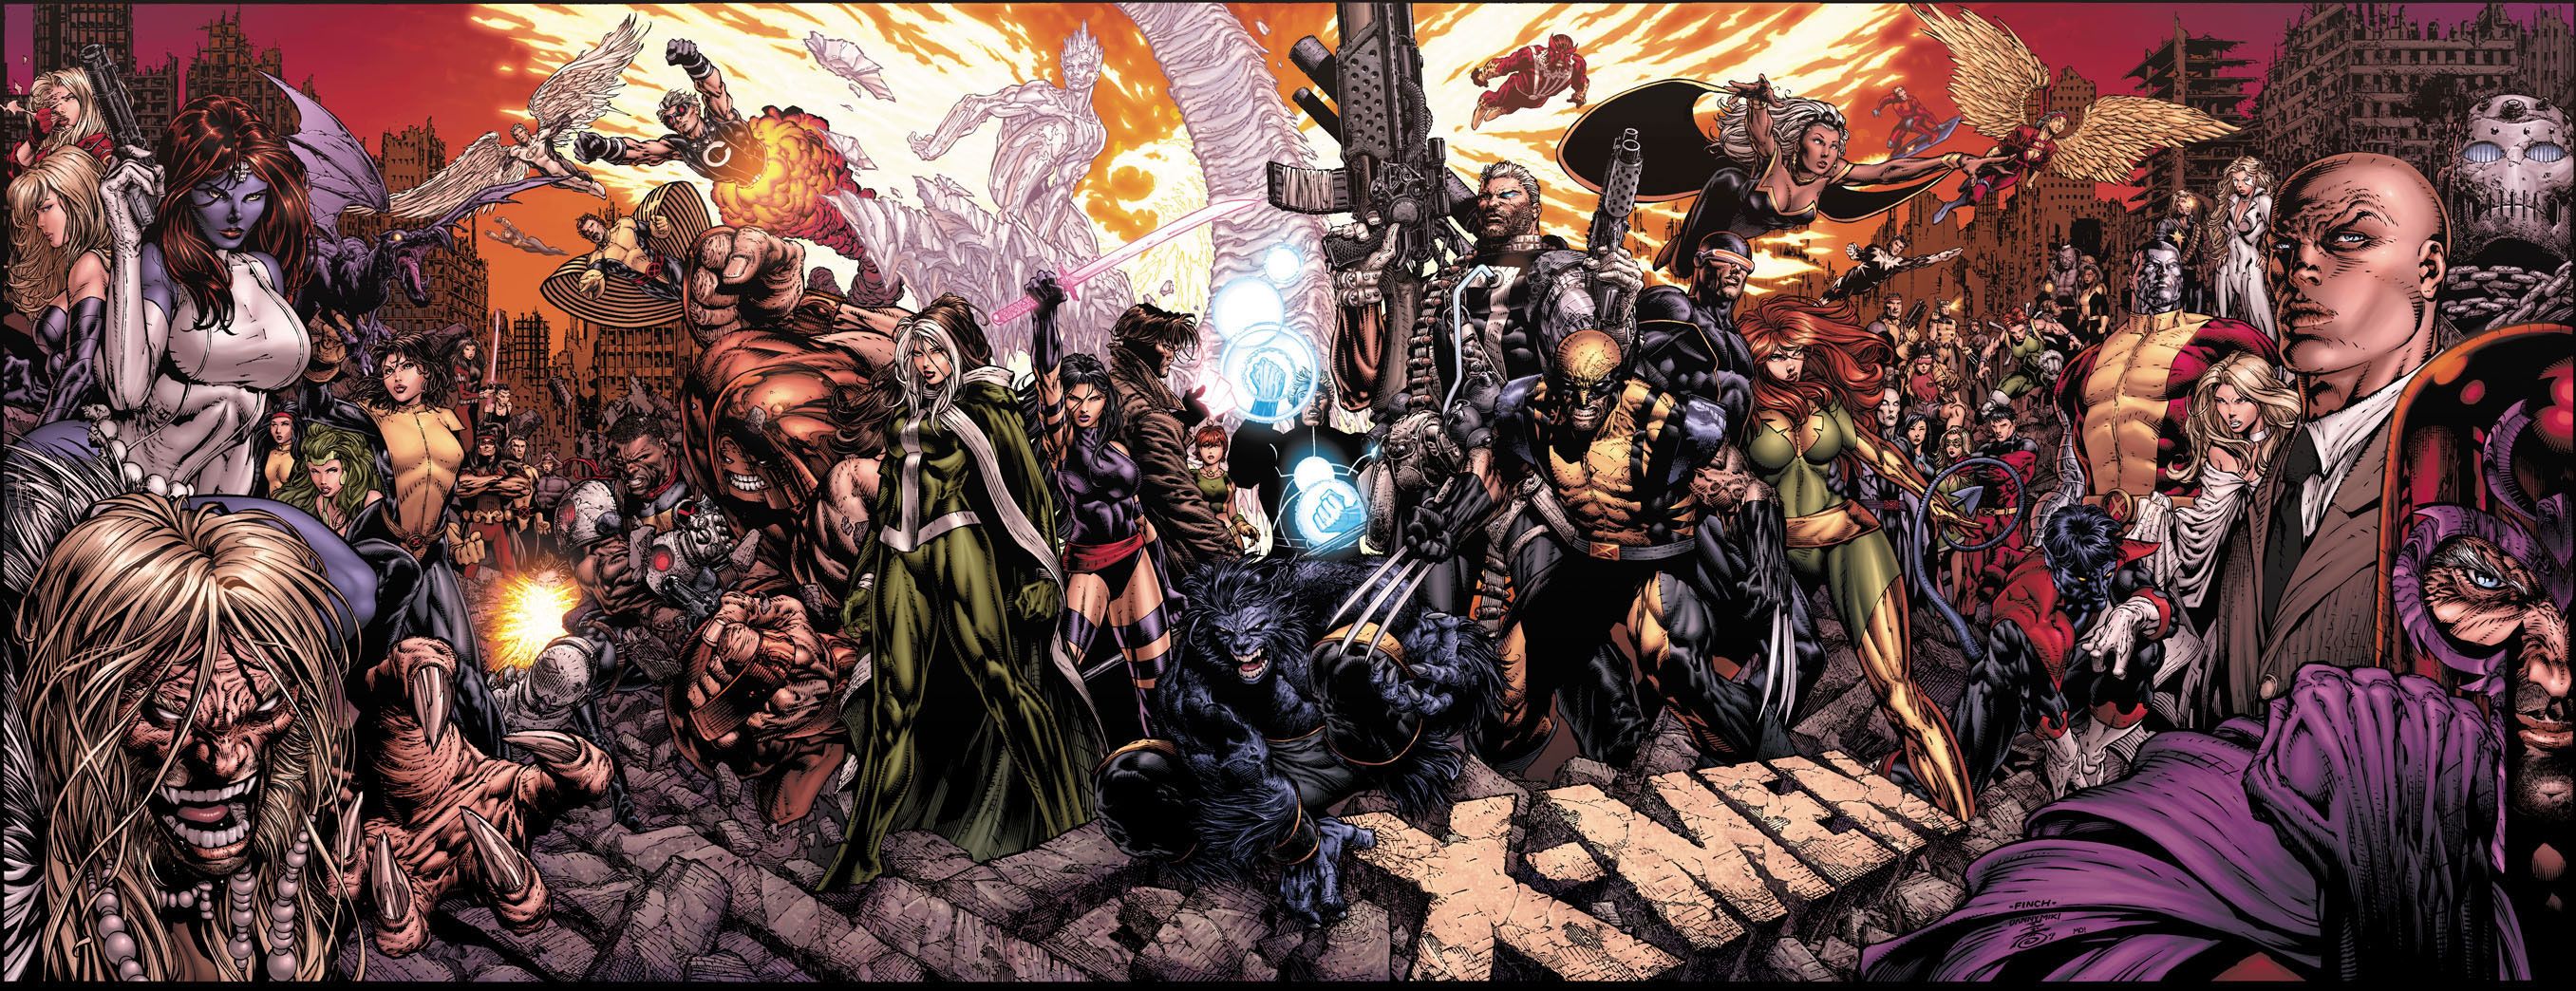 Brotherhood of Mutants Wallpaper. Black Dagger Brotherhood Wallpaper, Full Metal Alchemist Brotherhood Wallpaper and Brotherhood of Steel Wallpaper